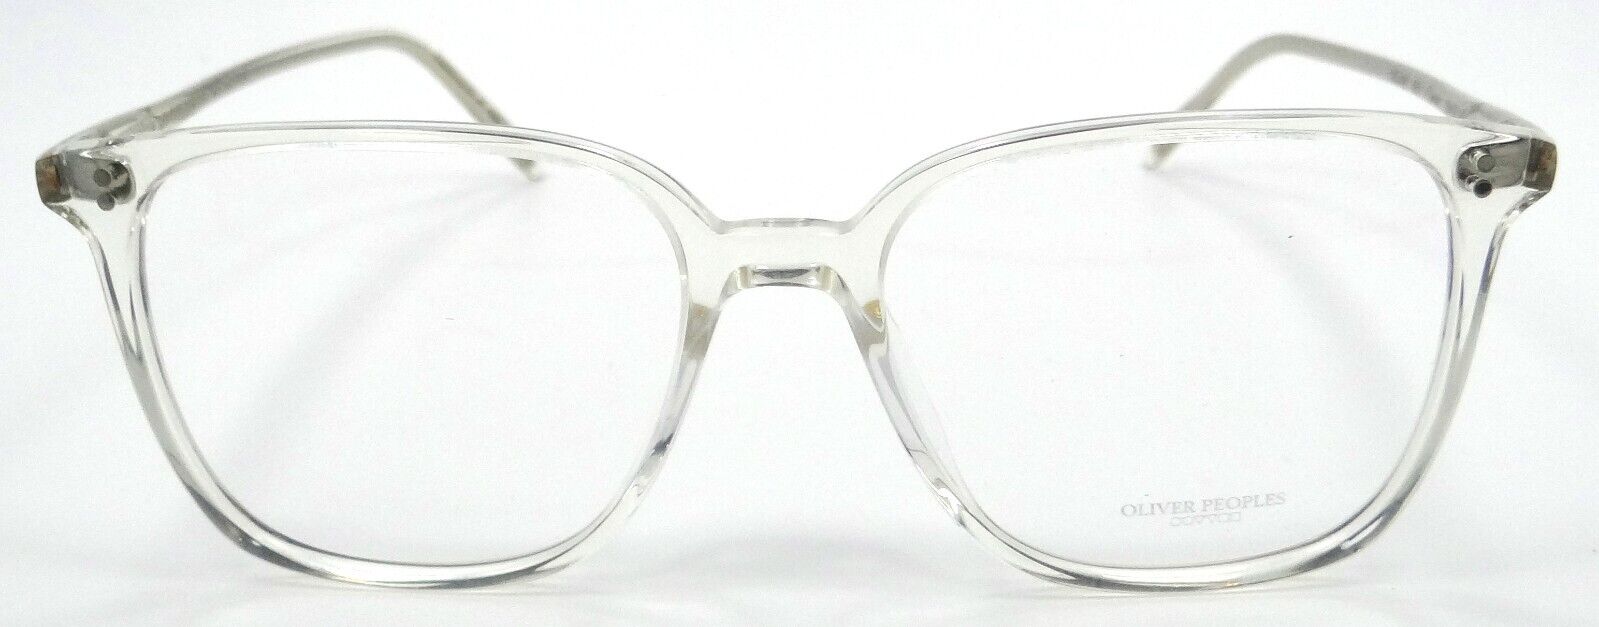 Oliver Peoples Eyeglasses Frames OV 5374U 1692 53-17-145 Coren Pale Citrine-827934470538-classypw.com-2